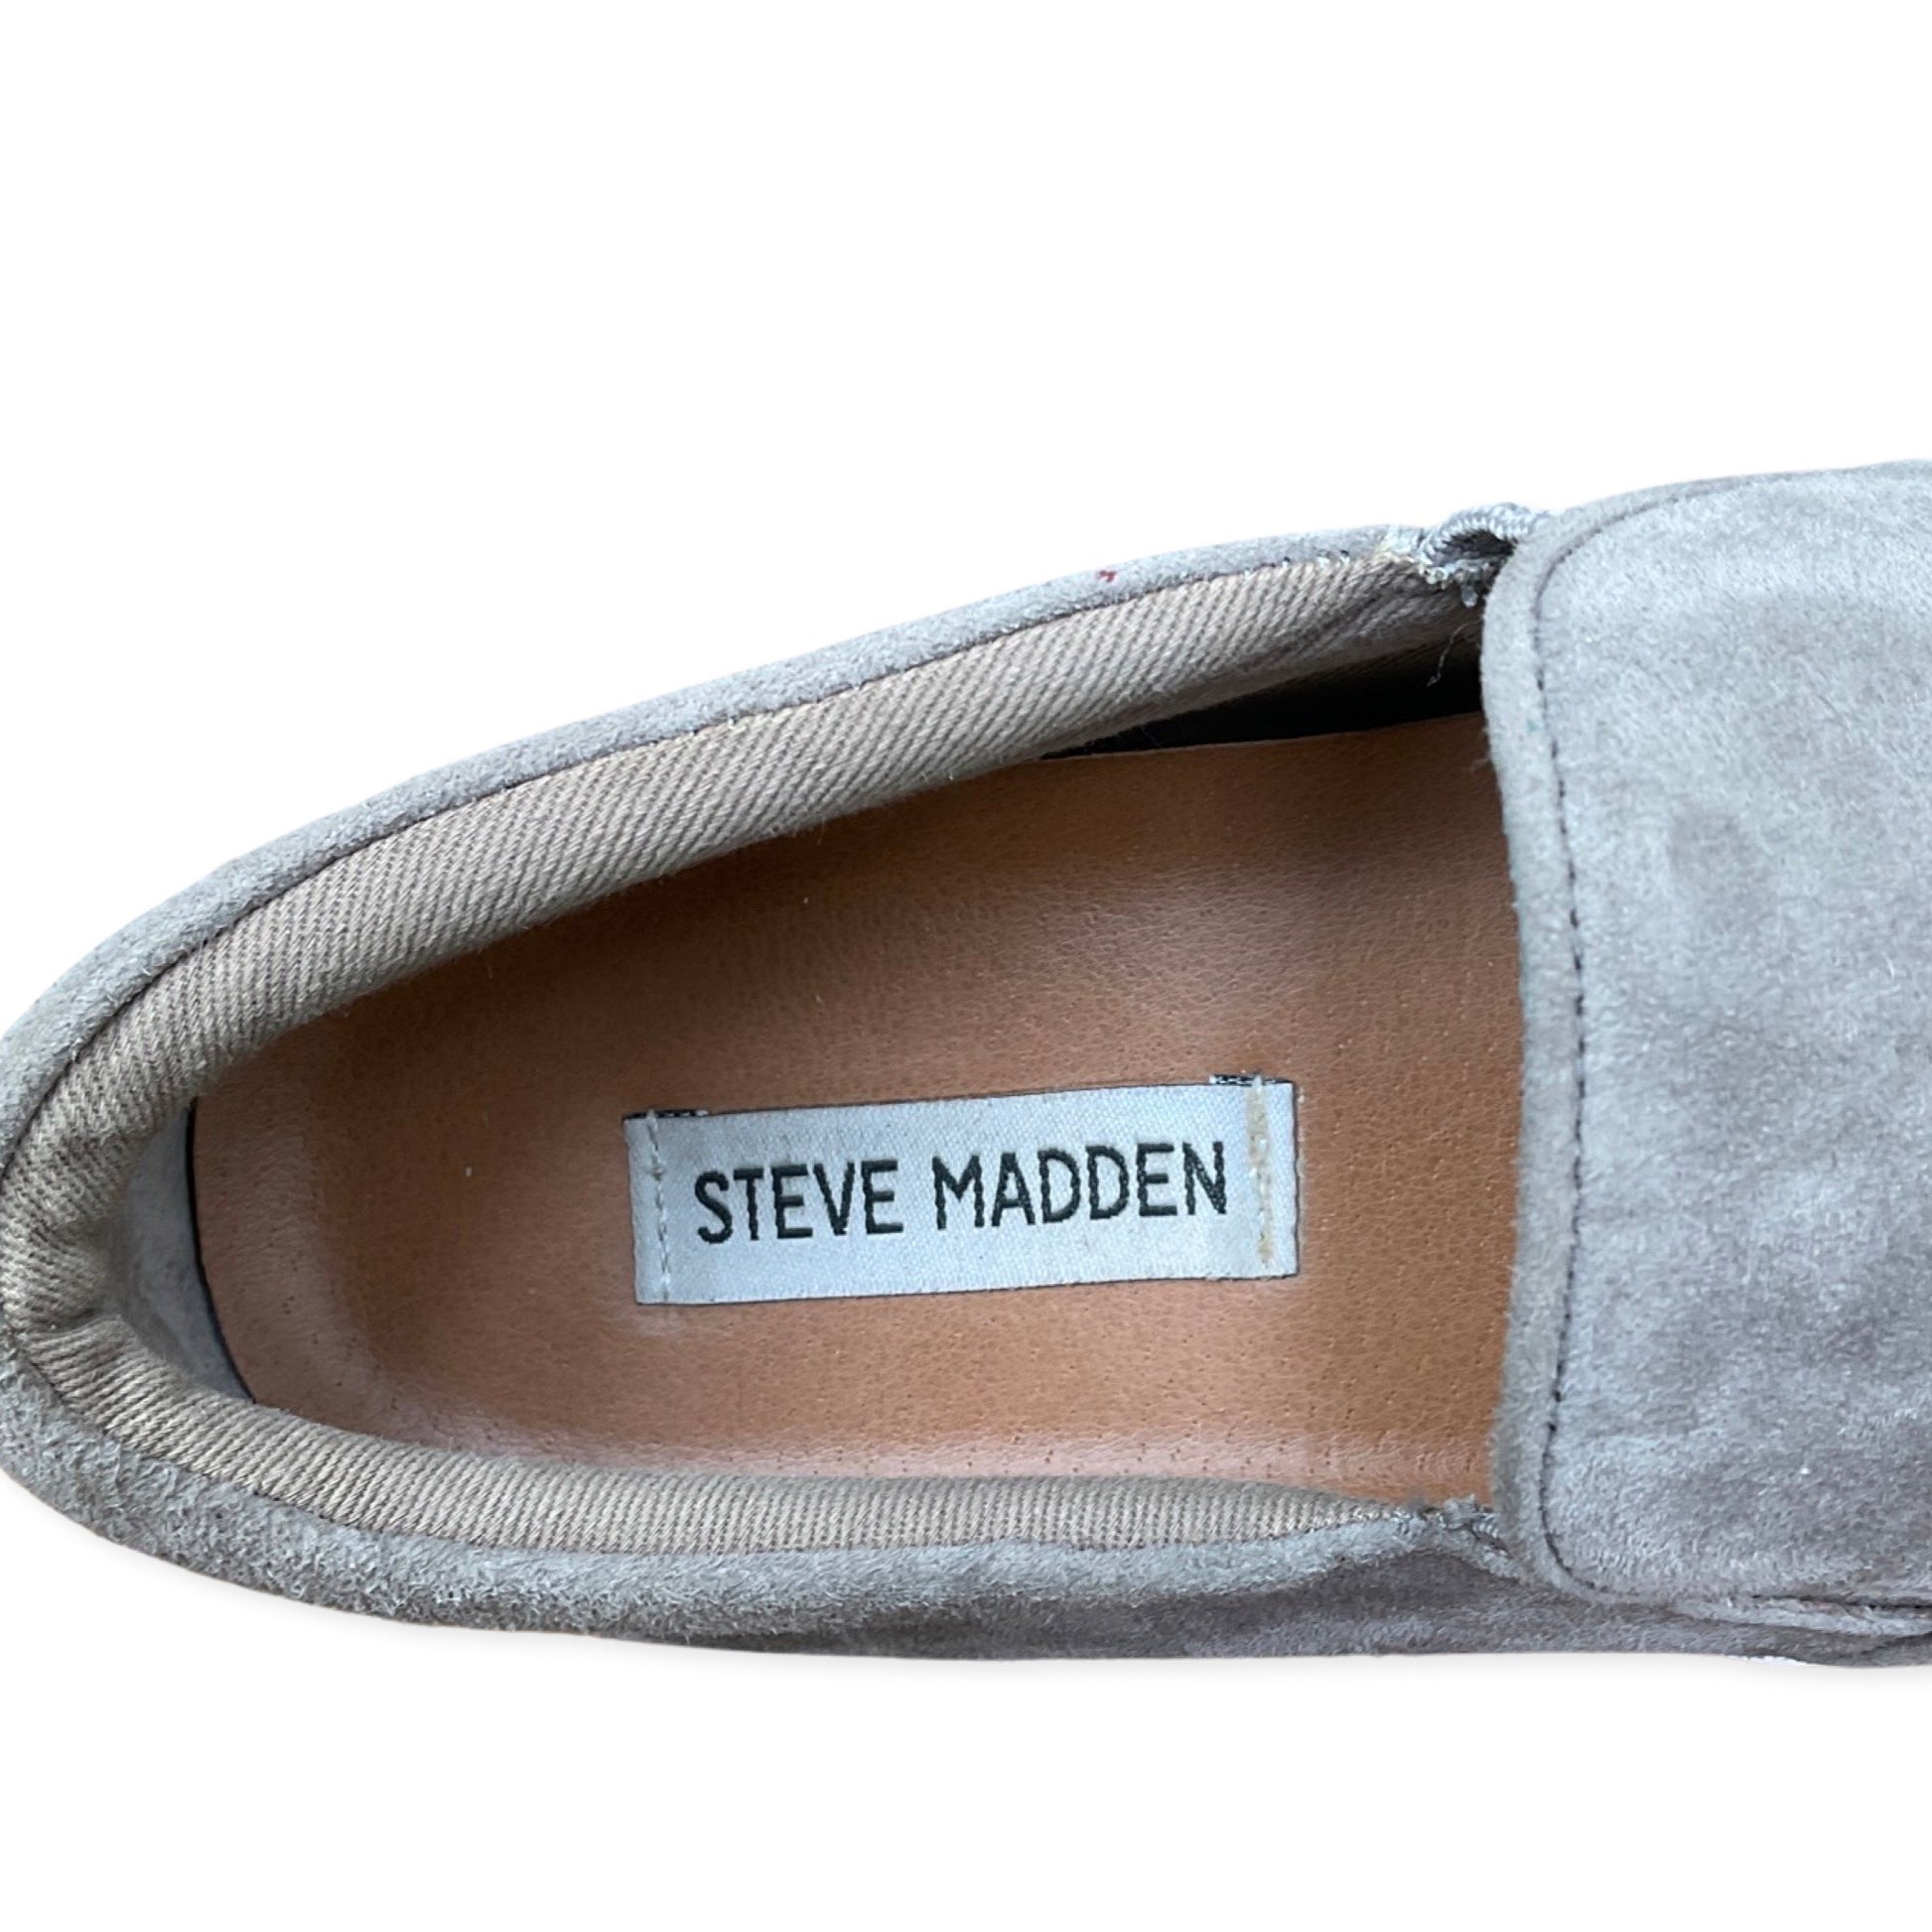 Zapatos Steve Madden Suede Gris - 7,5 Preloved Shop